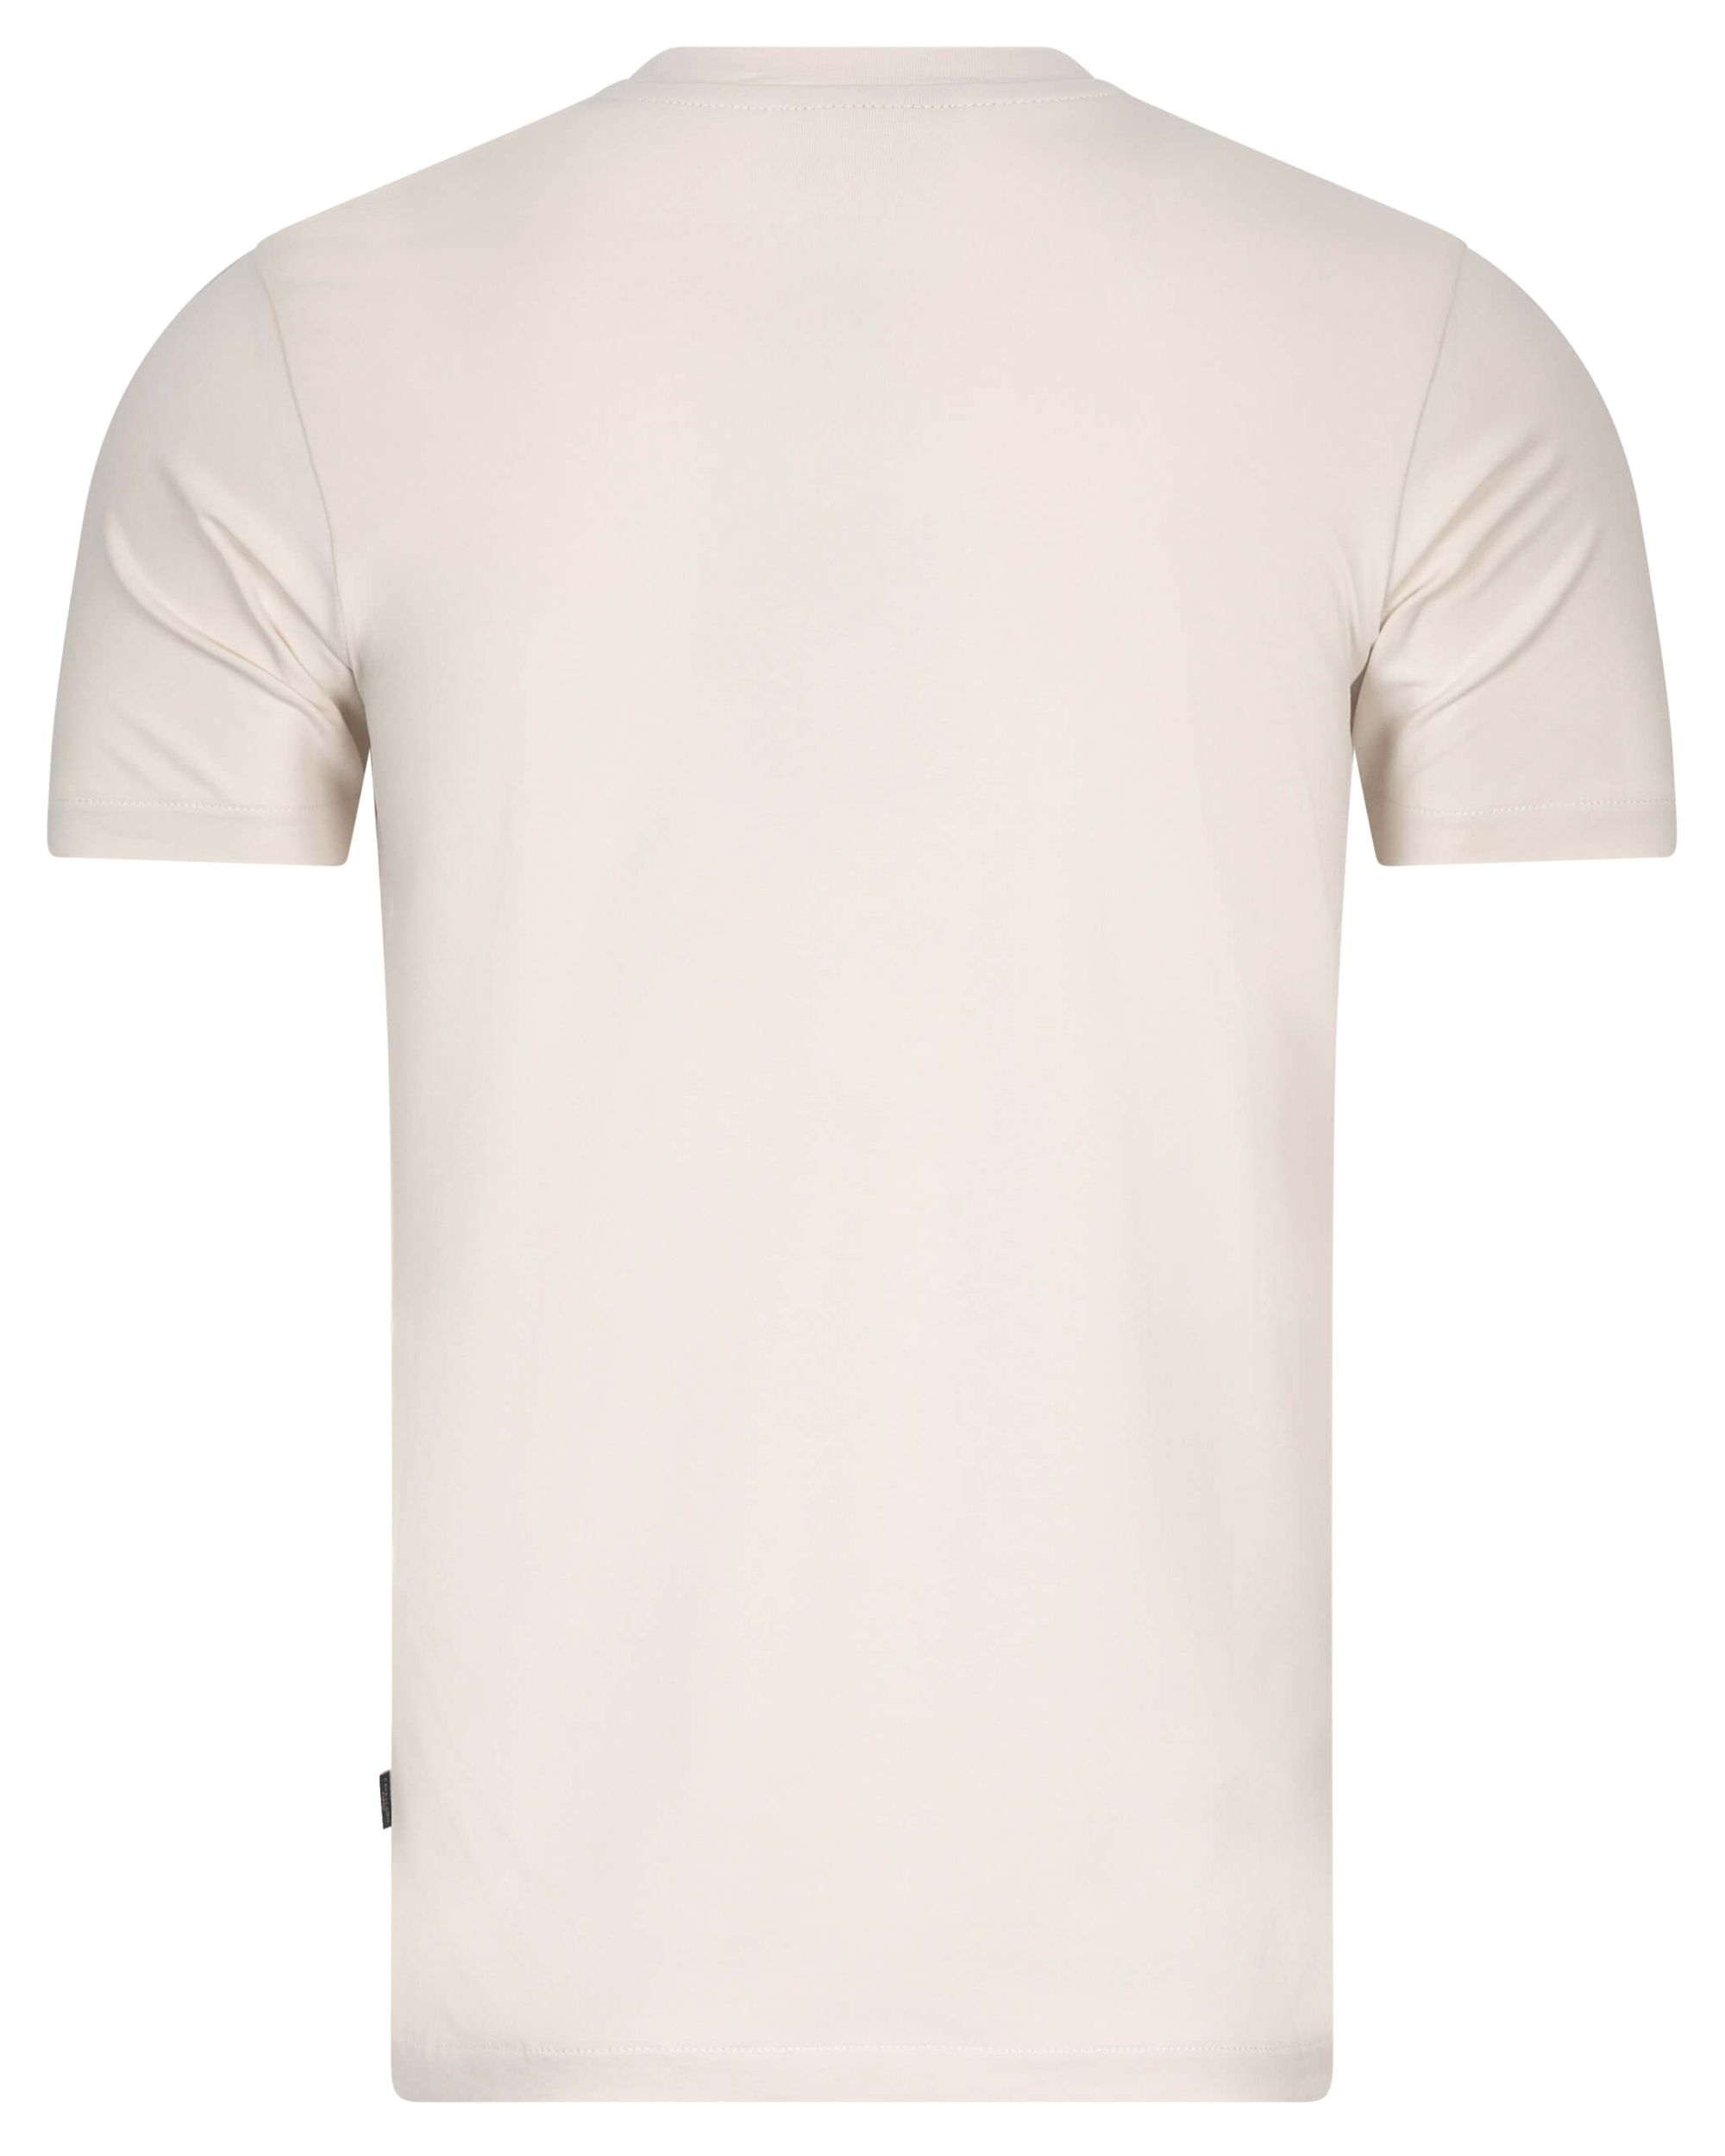 Cavallaro Bari T-shirt KM Kit 094411-001-L